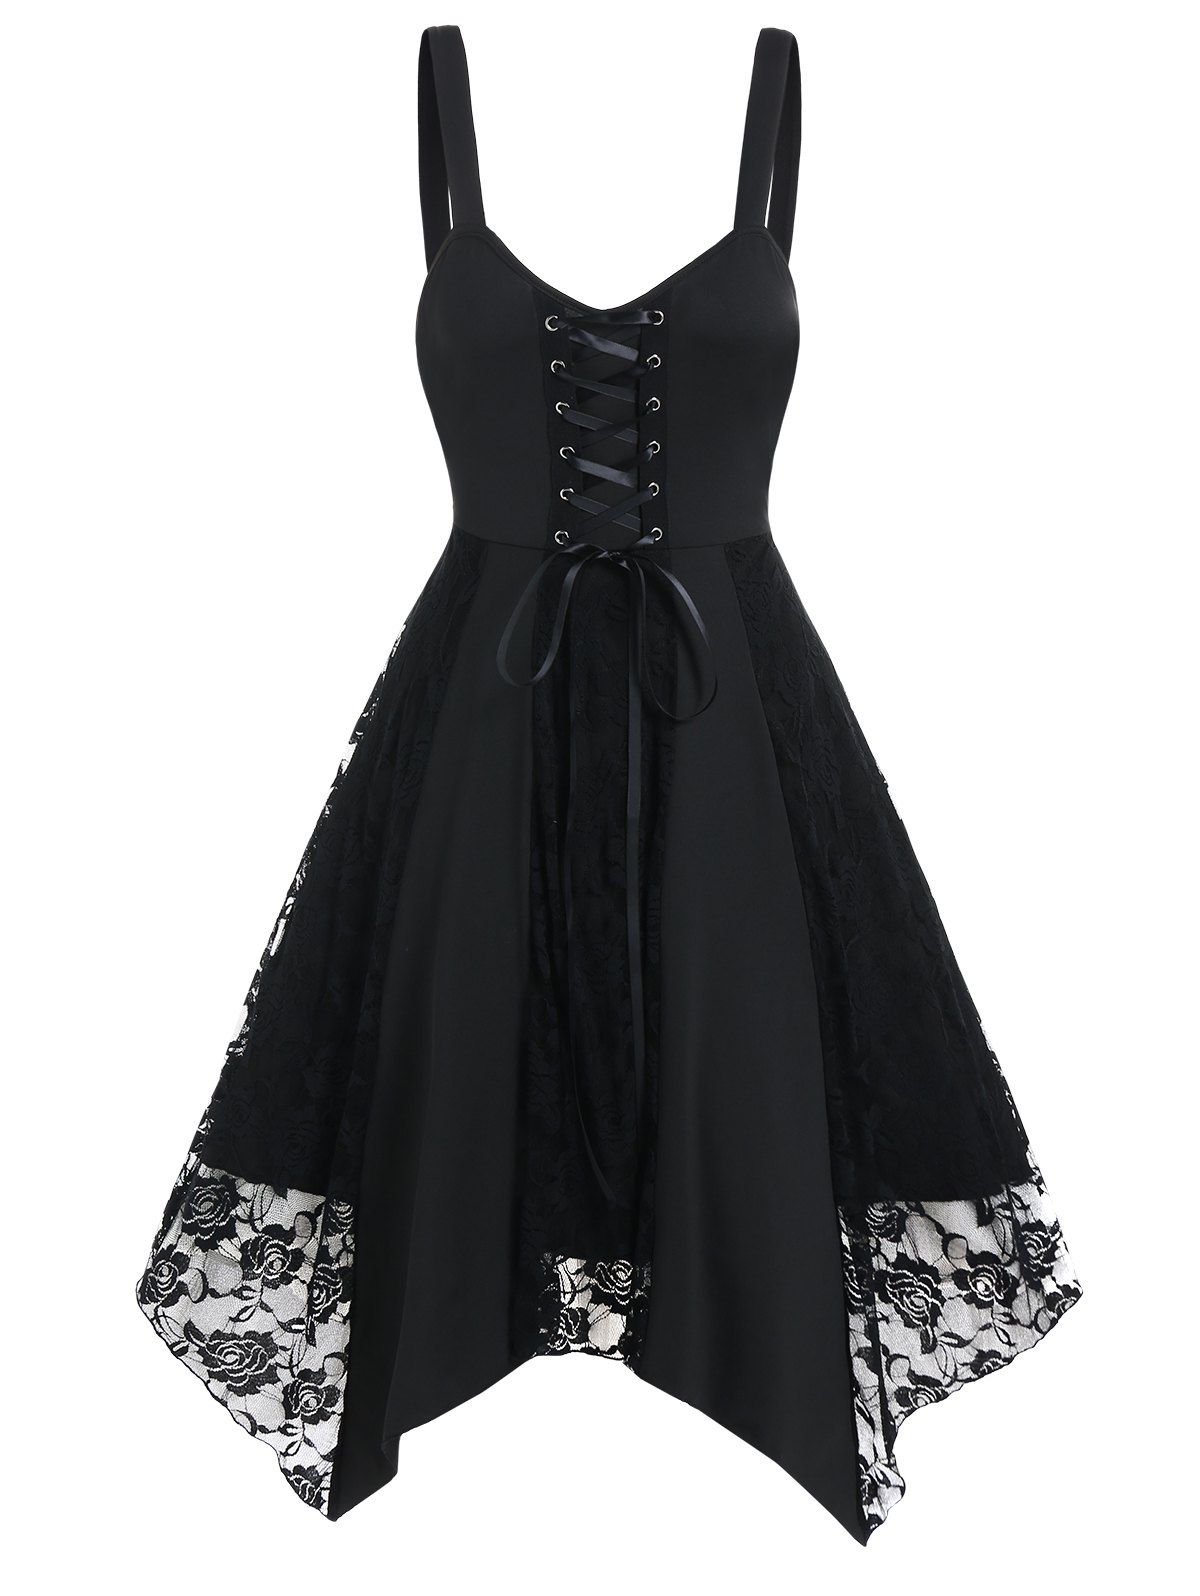 Gothic Dress Rose Lace Panel Lace Up High Waisted Dress Handkerchief Hem Midi Dress - BLACK L